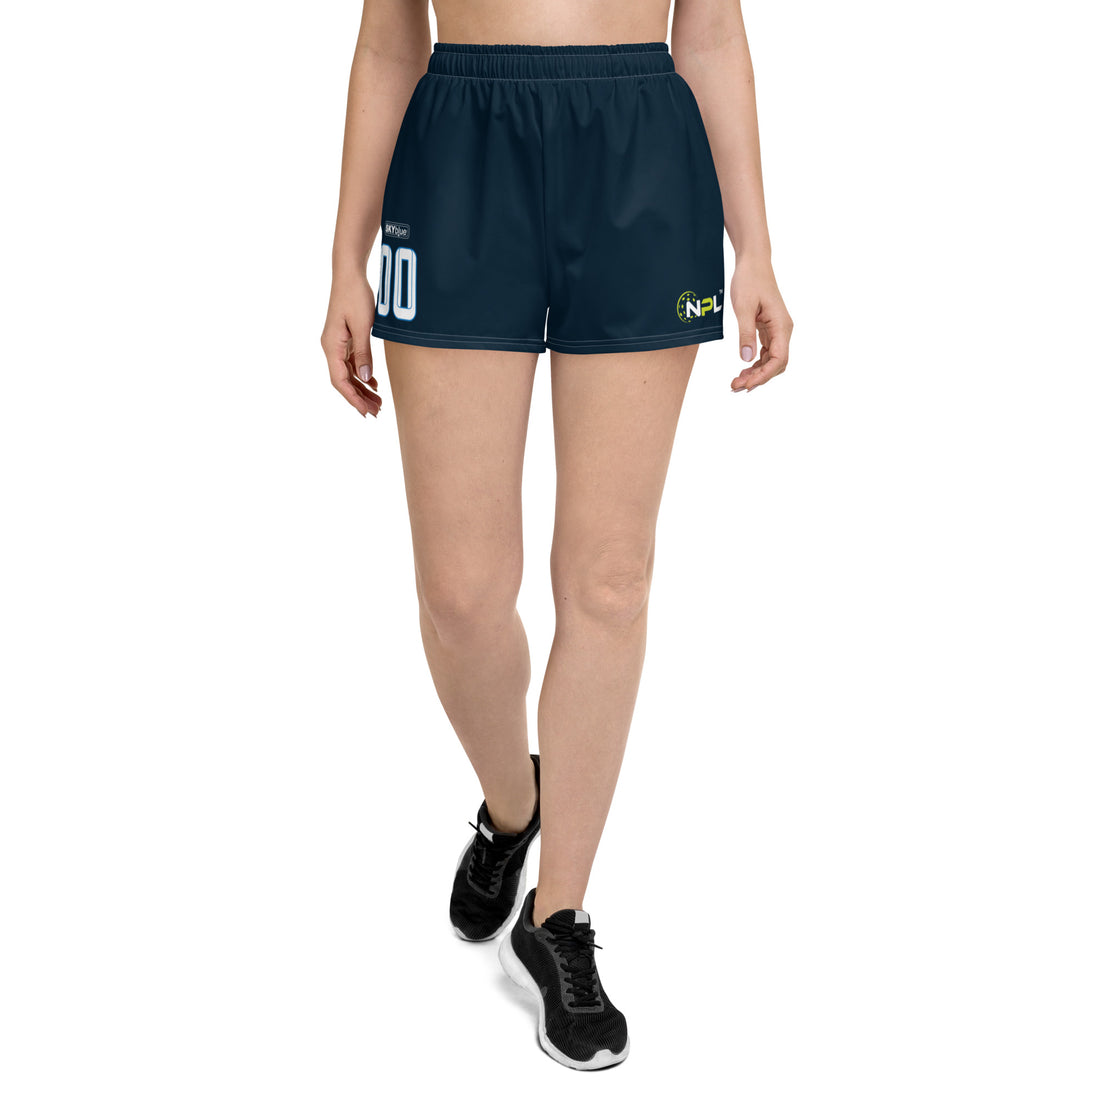 Ann Wilkinson 00 Boca Raton Picklers™ SKYblue™ 2023 Authentic Shorts for Women - Dark Blue